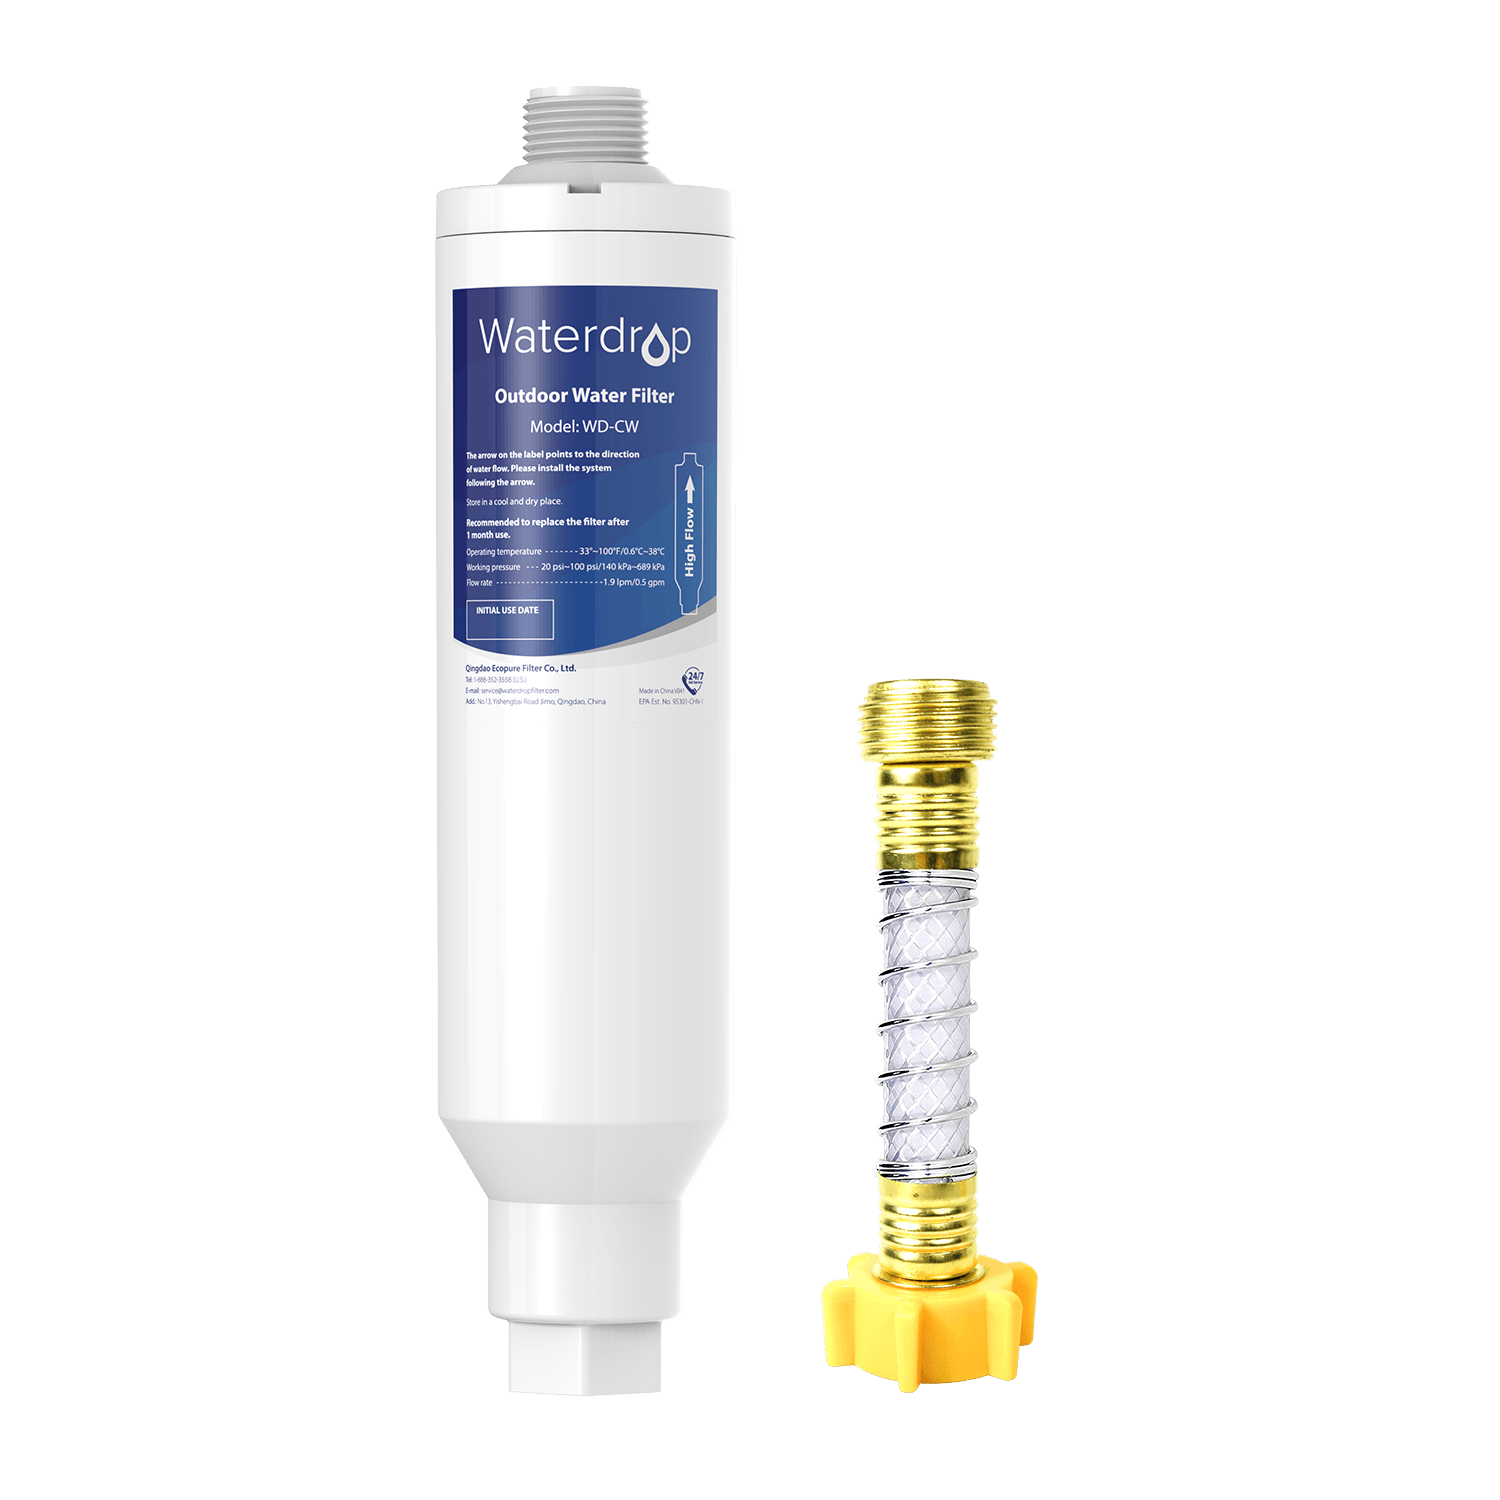 Car Wash Watering Can, Multi-function Air Pressure Sprayer, 0.5